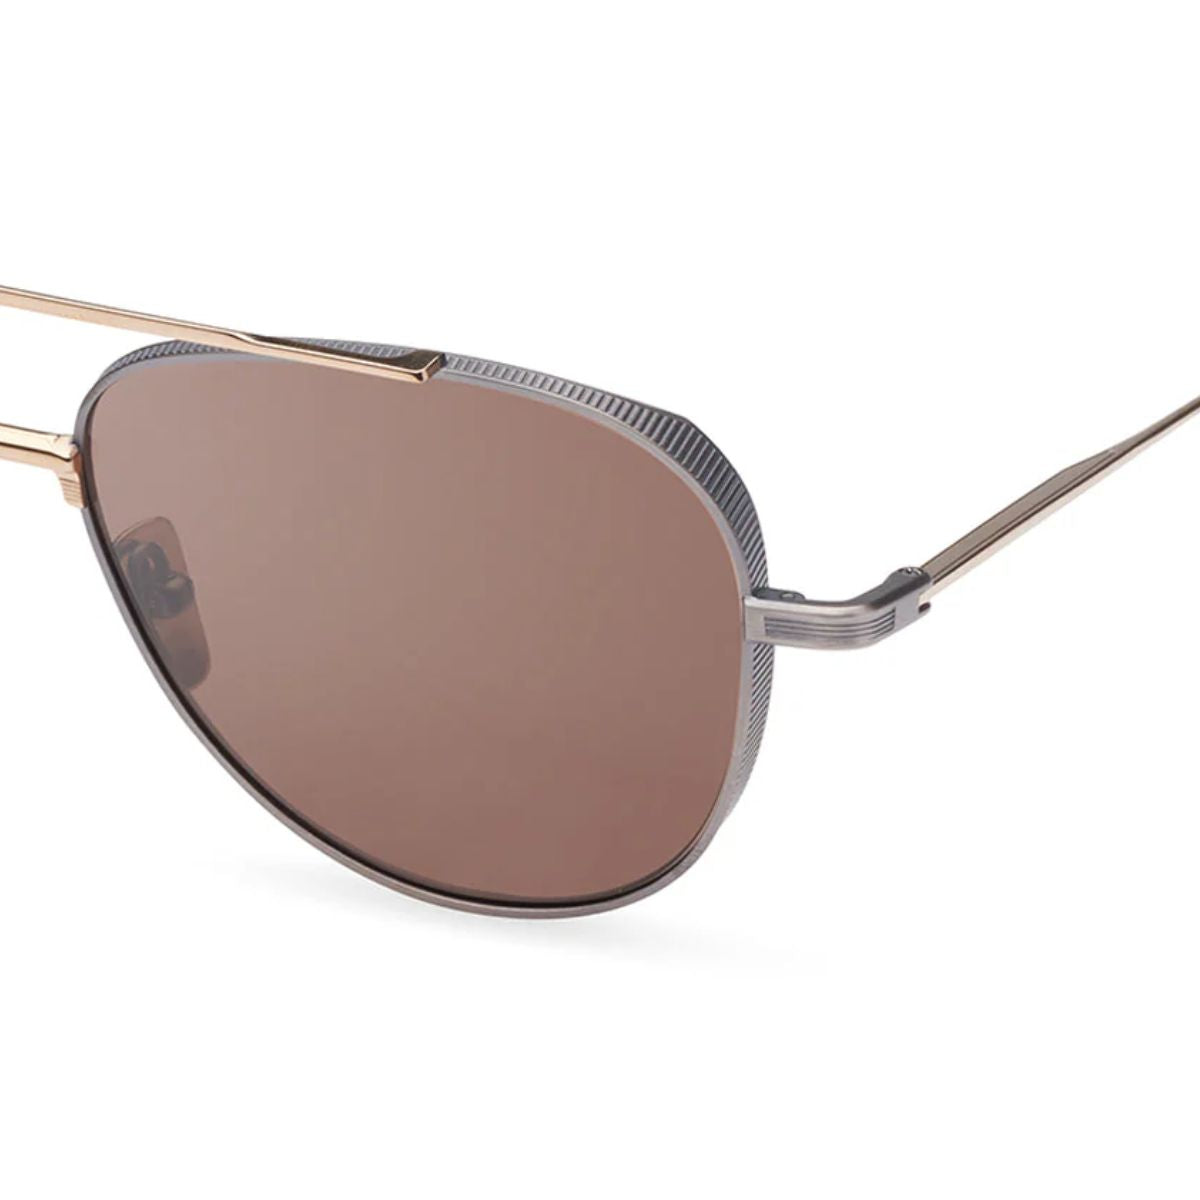 "Buy Stylish Aviator Anti-Reflection Sunglasses For Both Men & Women | Optorium"